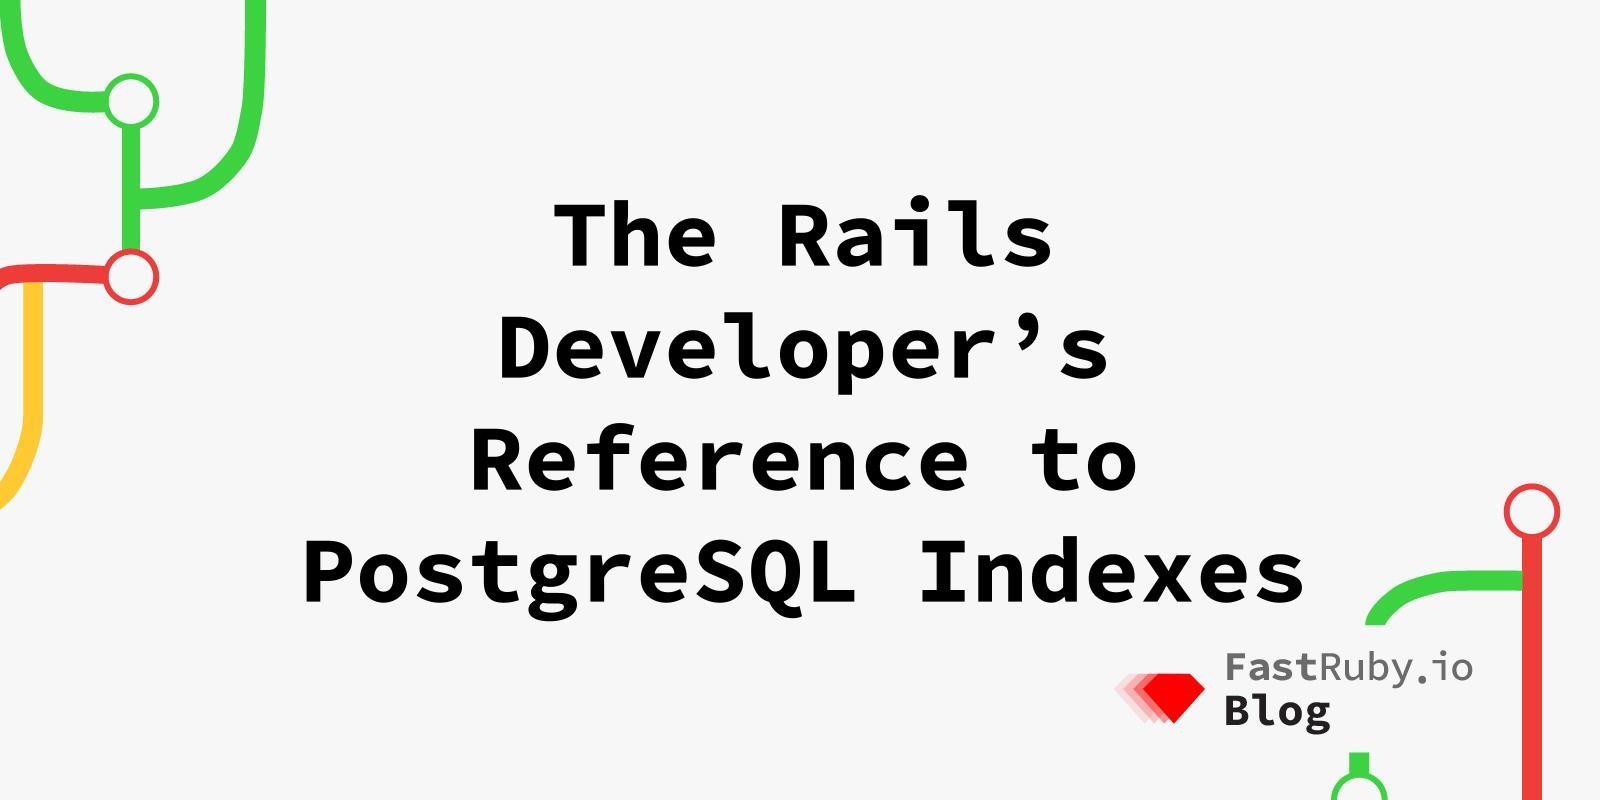 The Rails Developer's Reference to PostgreSQL indexes